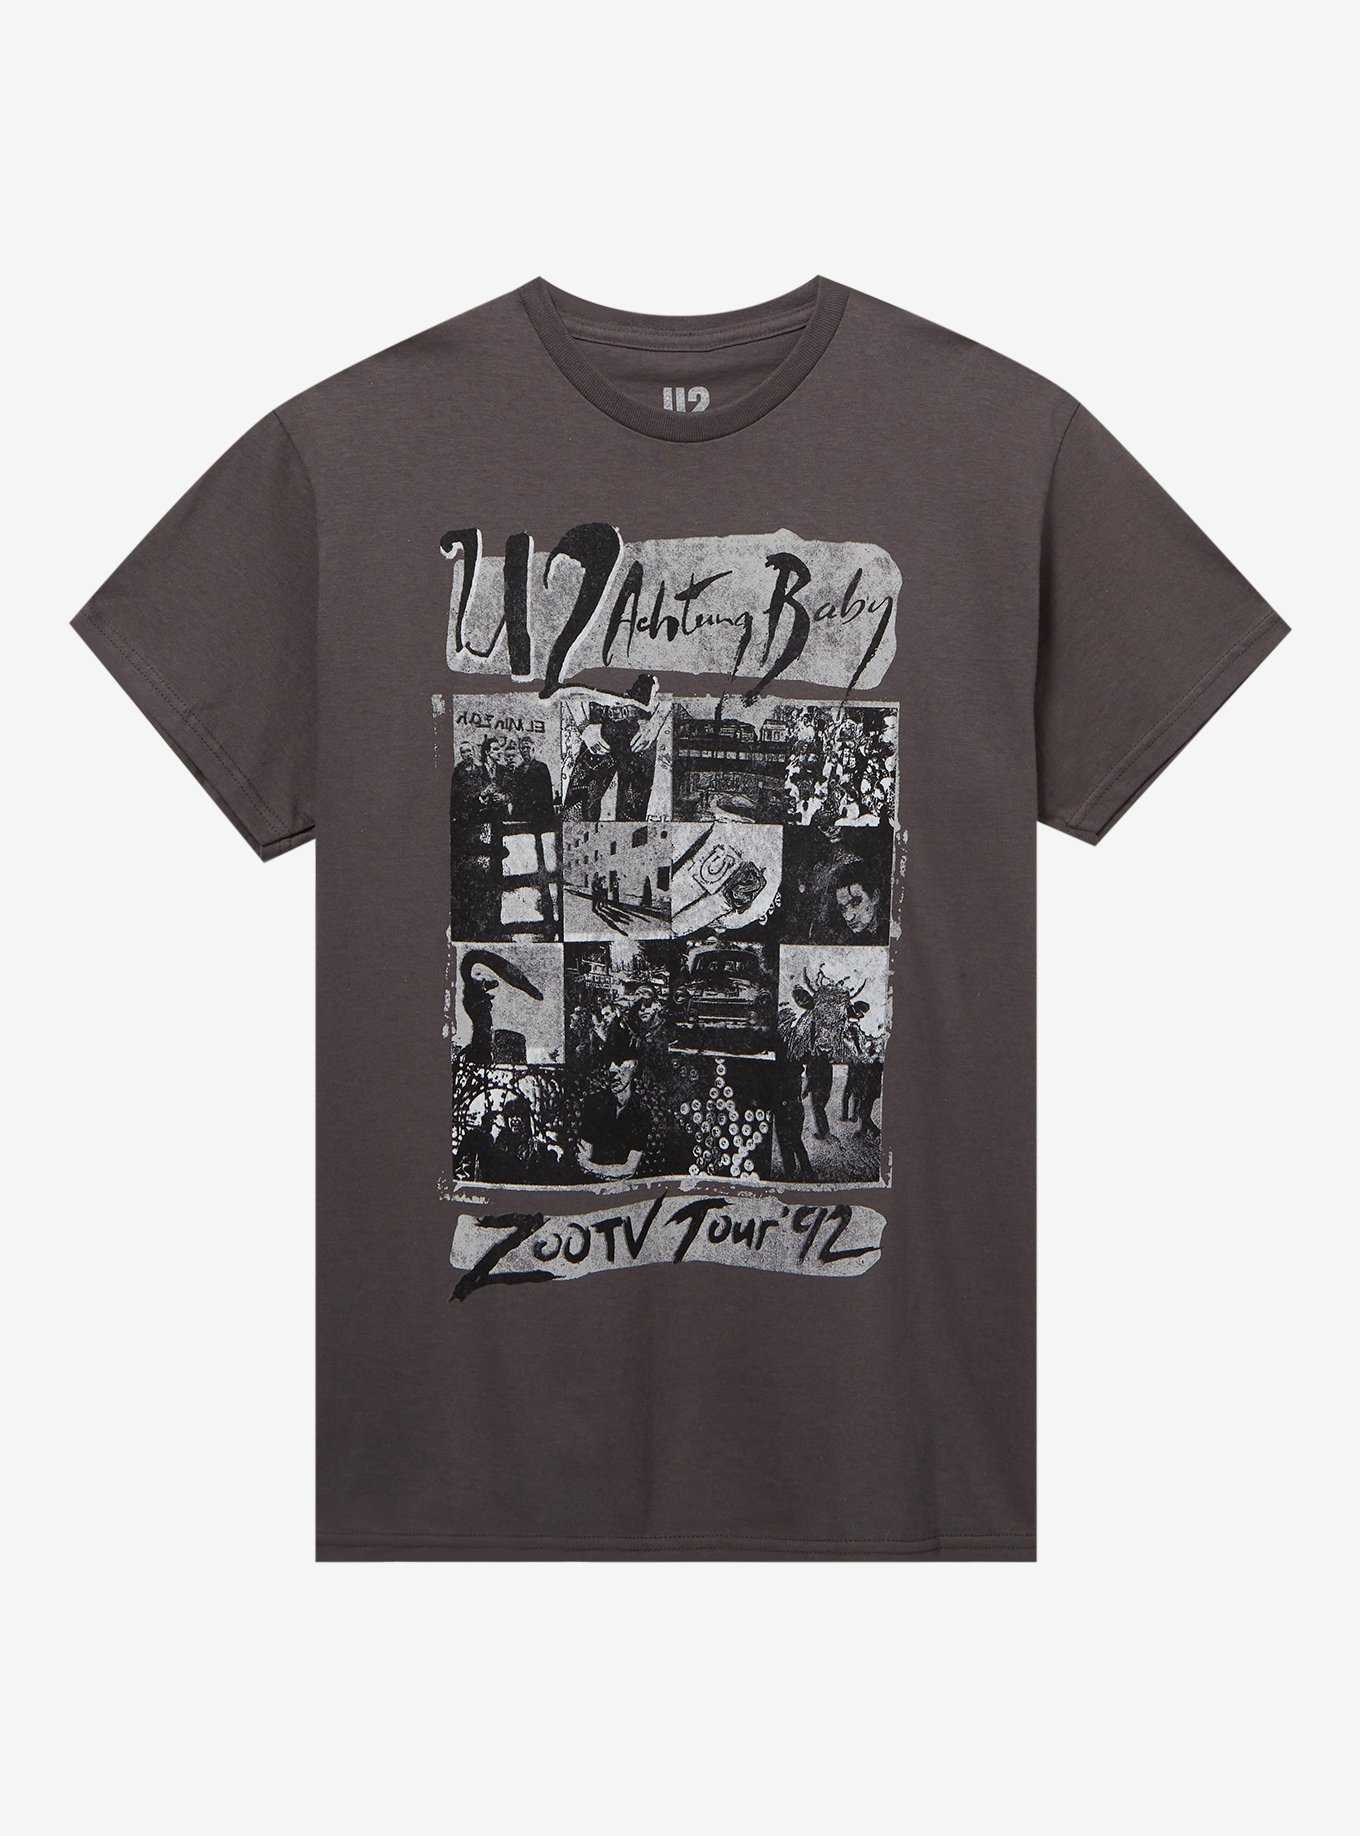 U2 Achtung Baby Zoo TV 1992 Tour T-Shirt, , hi-res